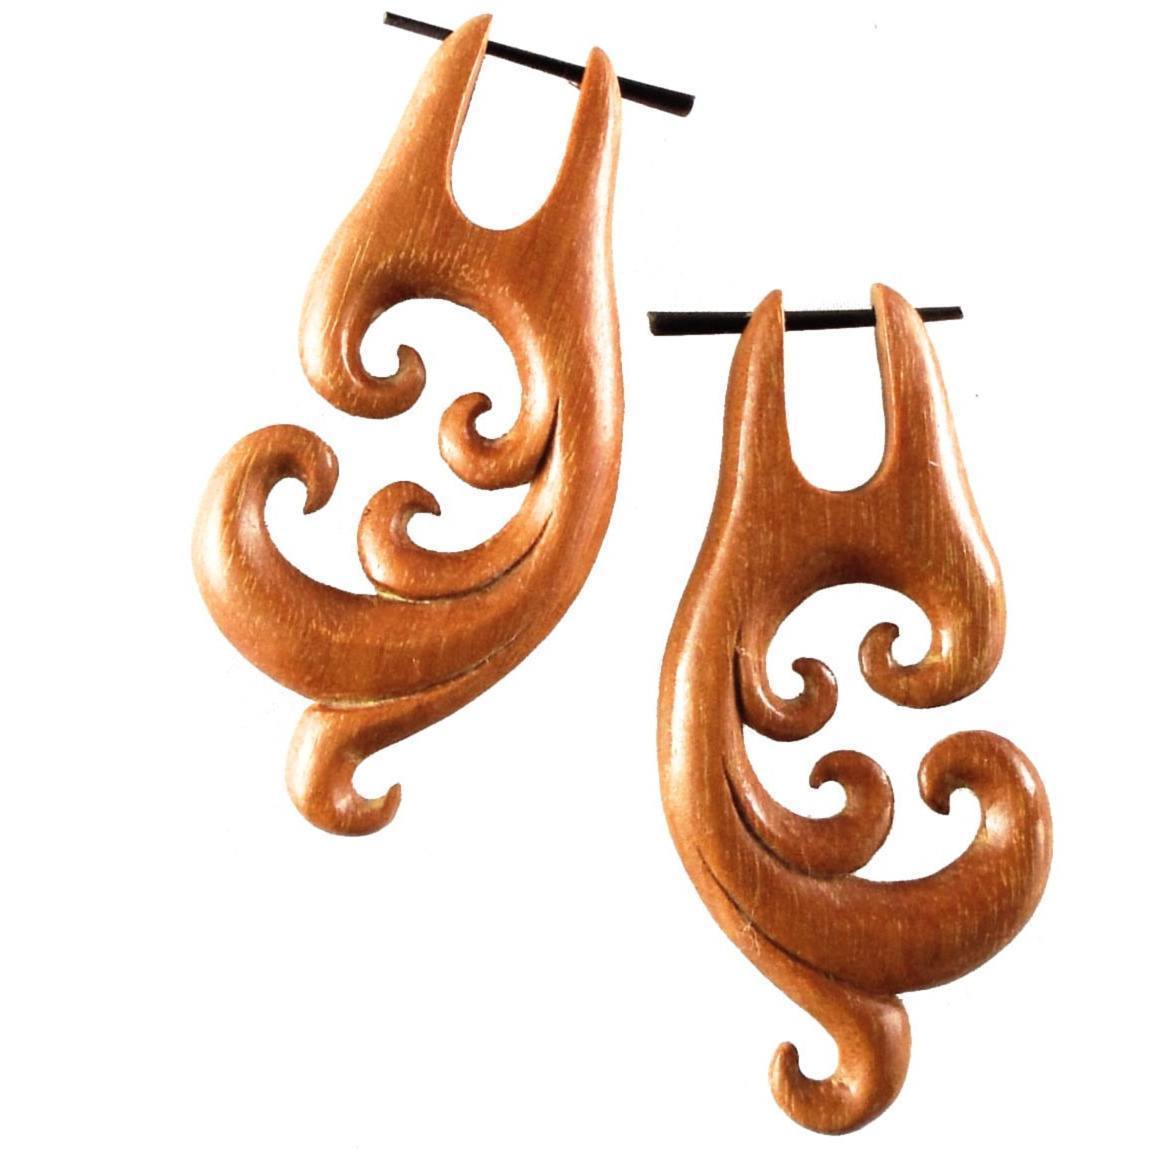 Natural Jewelry :|: Spectral Swirl, Sapote Wood Earrings. 1 inch W x 2 1/4 inch L. | Wood Earrings